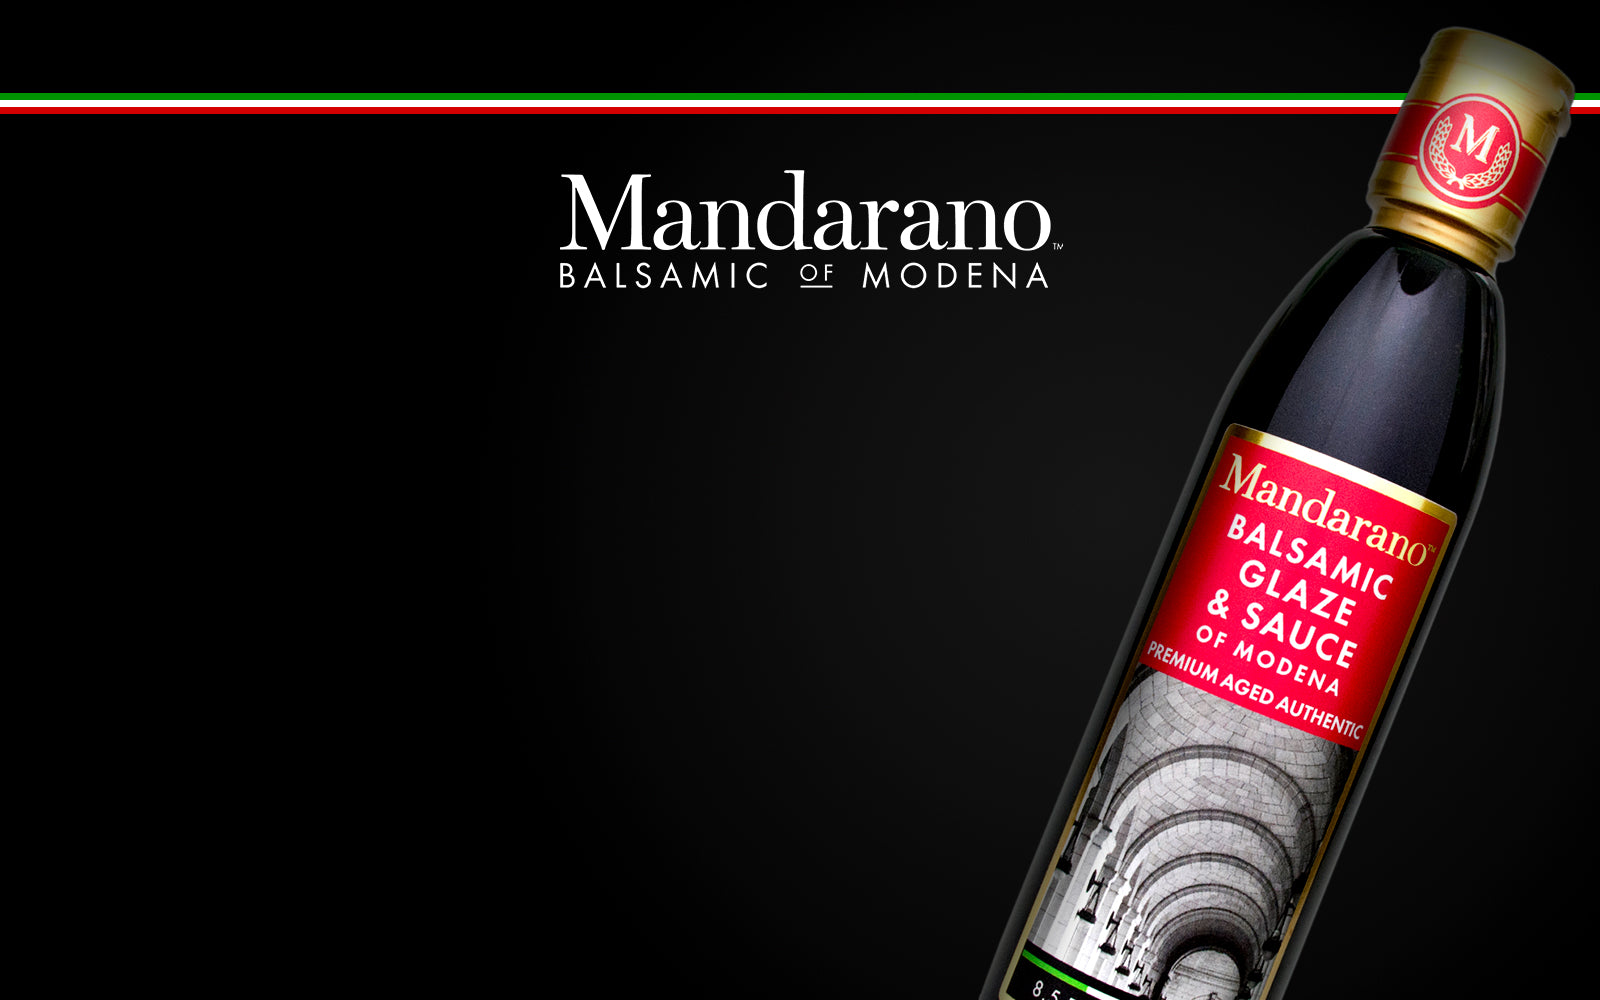 of All Mandarano Authentic. Premium Balsamic Aged – Modena